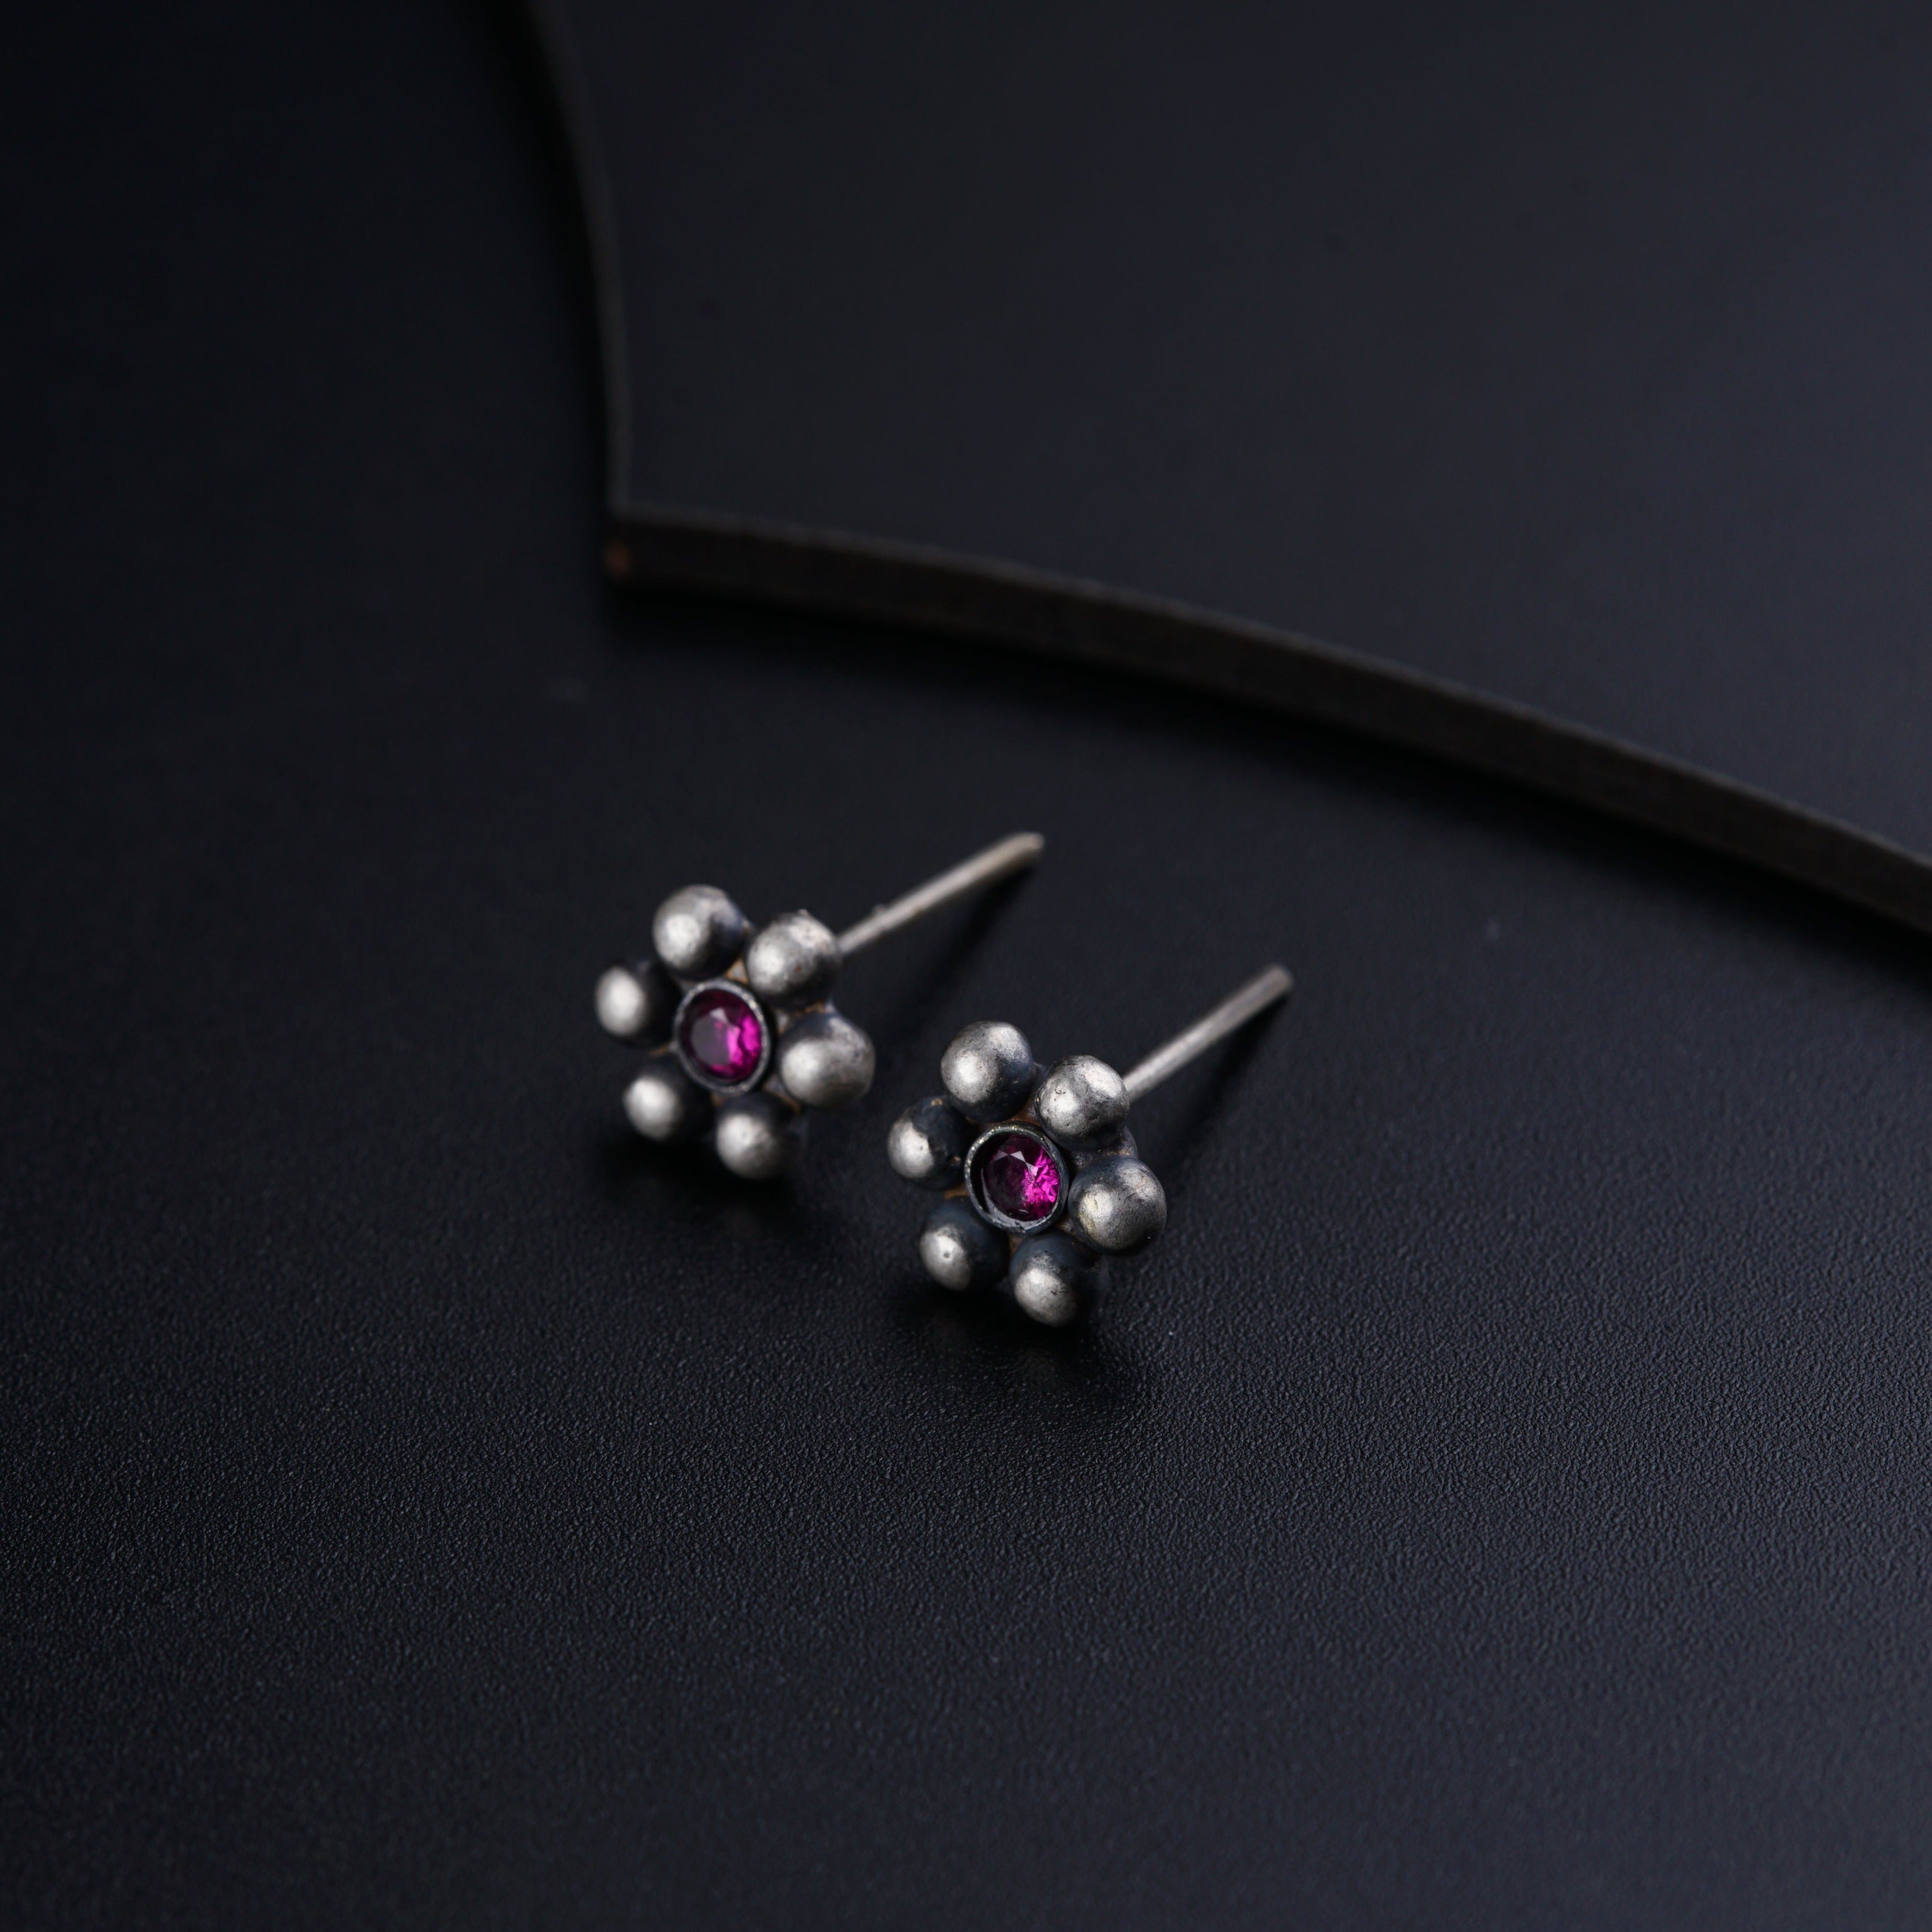 Kudi with pink stone earrings - Small